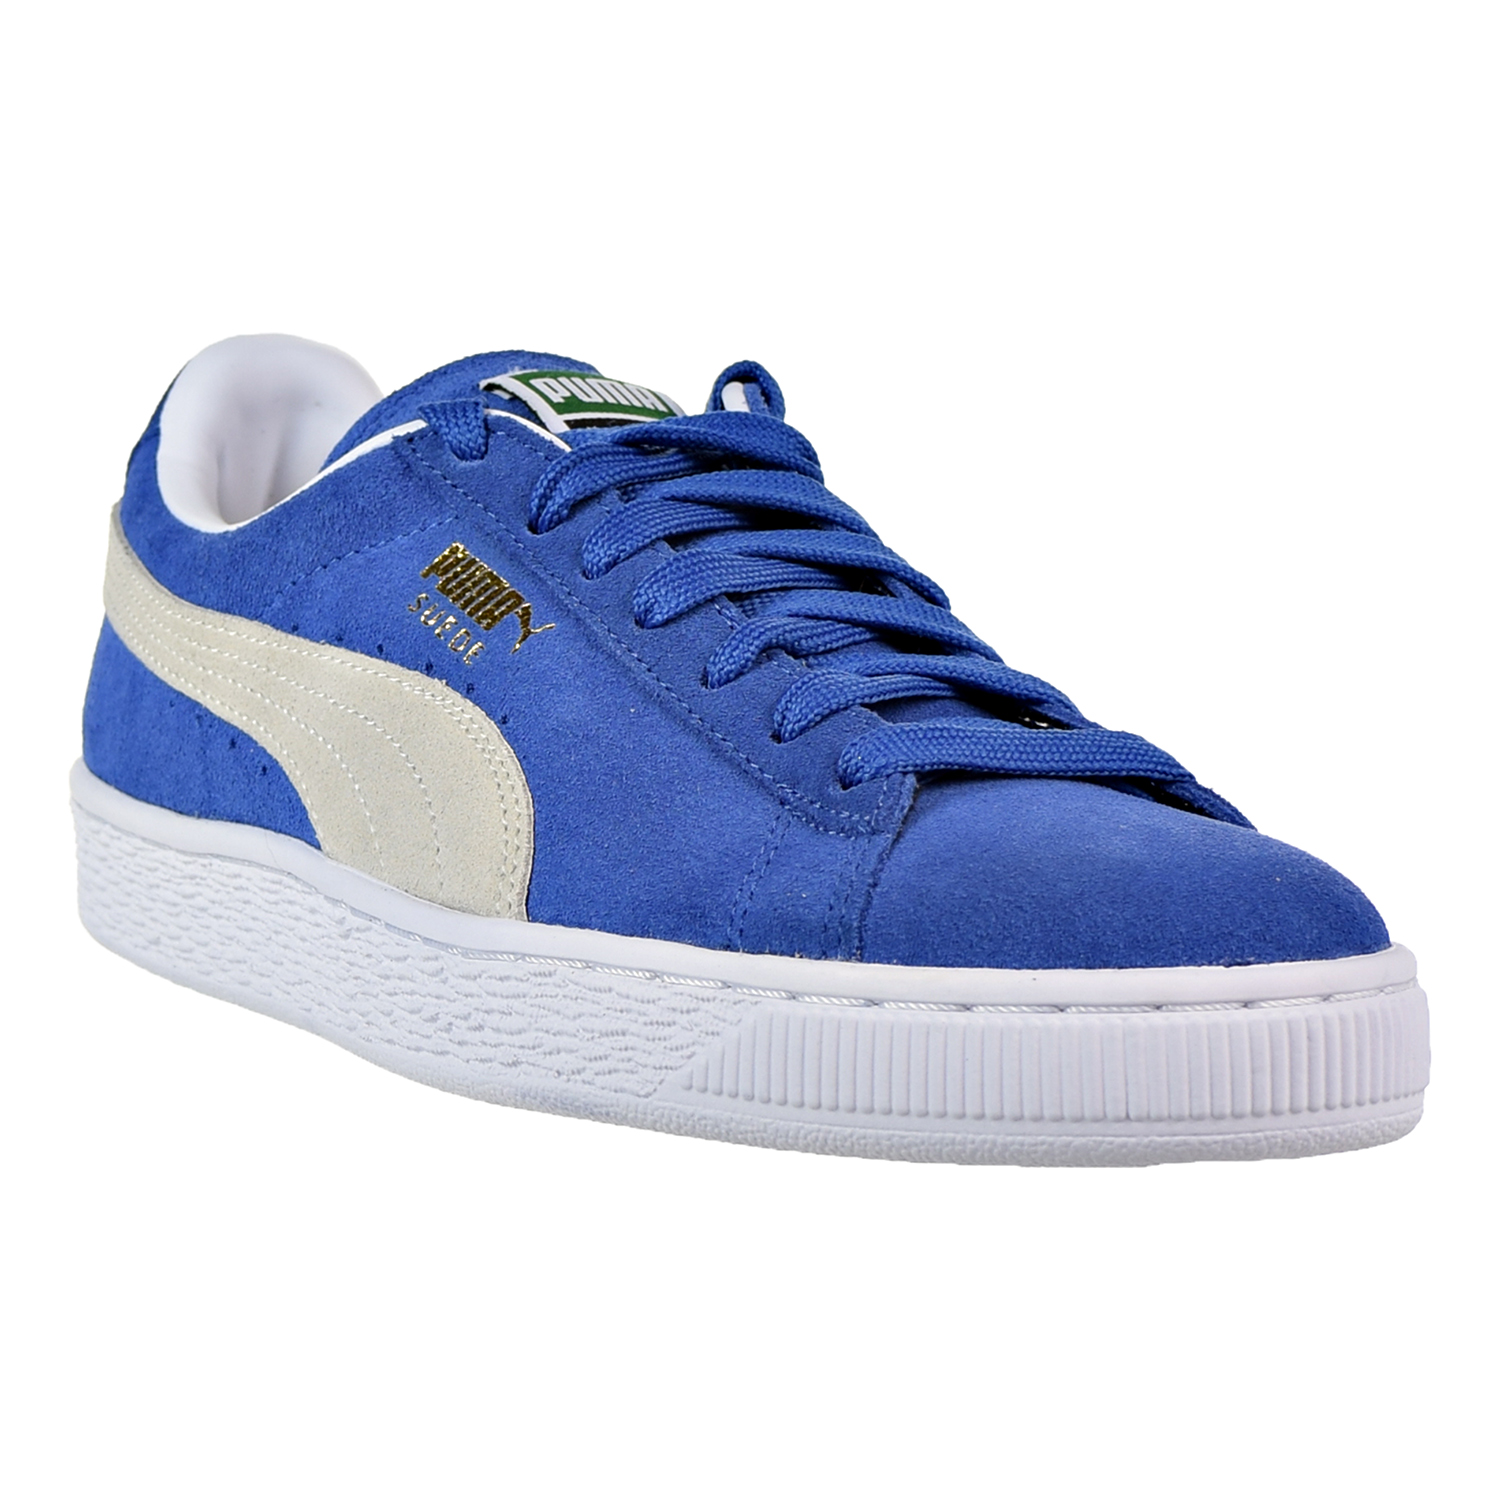 Puma Suede Classic+ Men's Shoes Olympian Blue-White 352634-64 | eBay